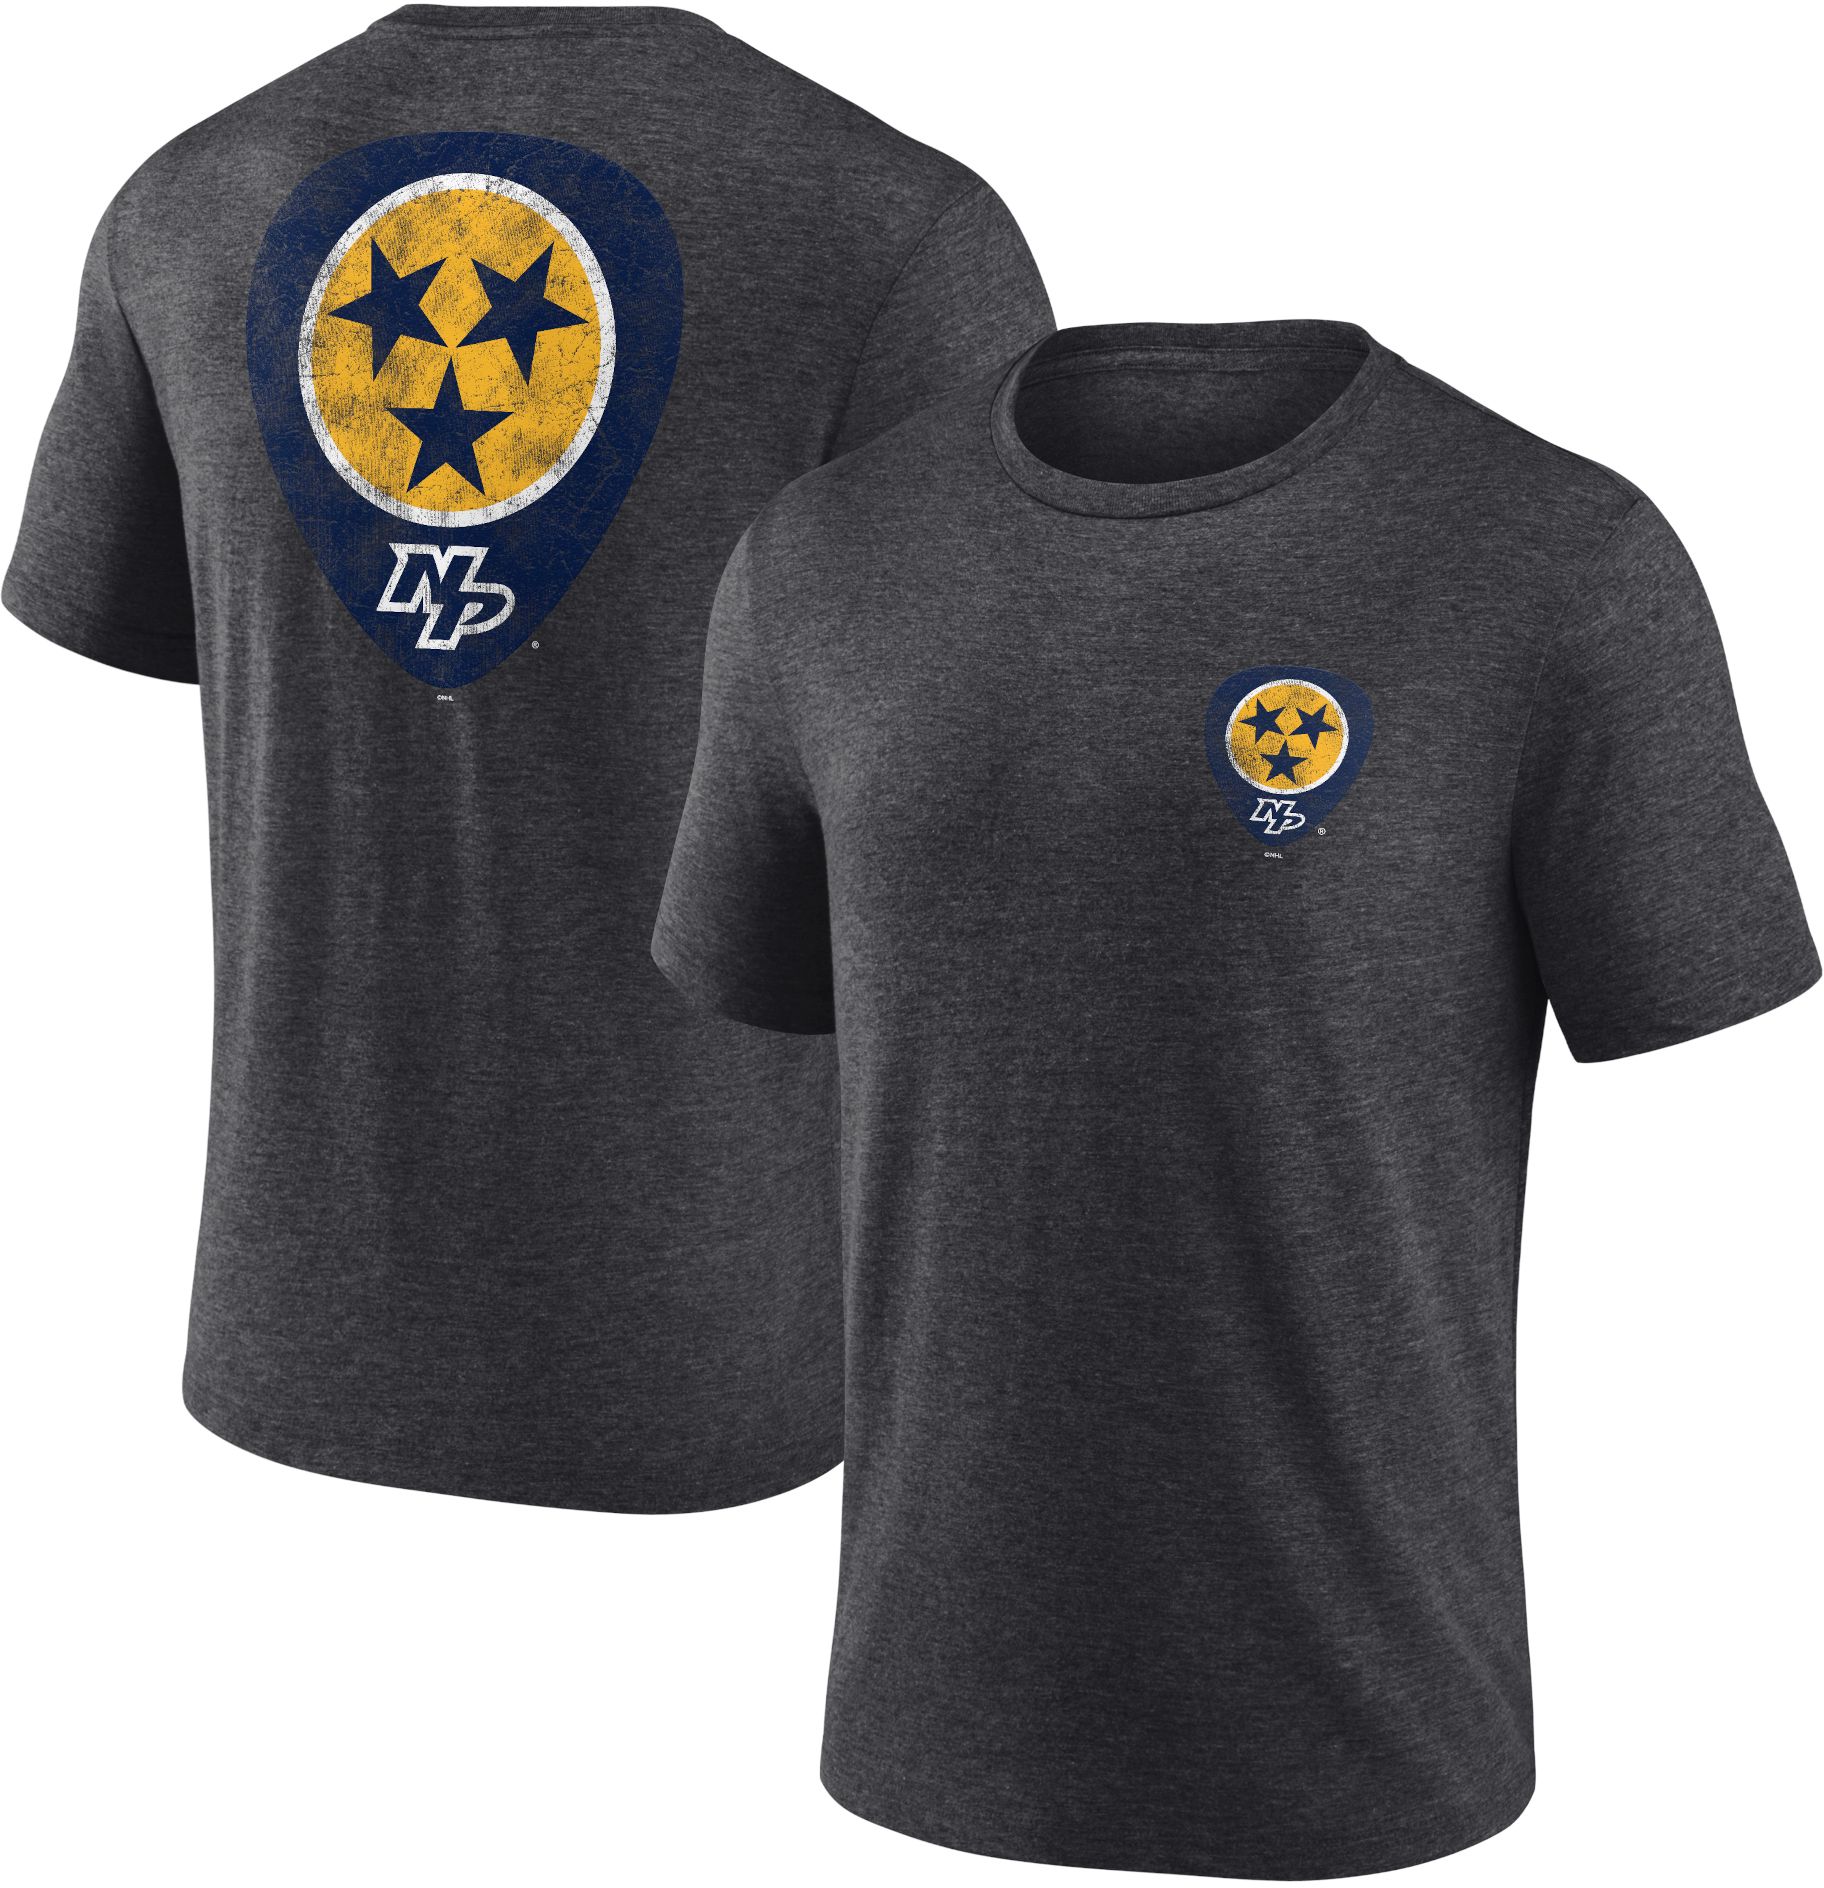 Nashville Predators official patch jersey